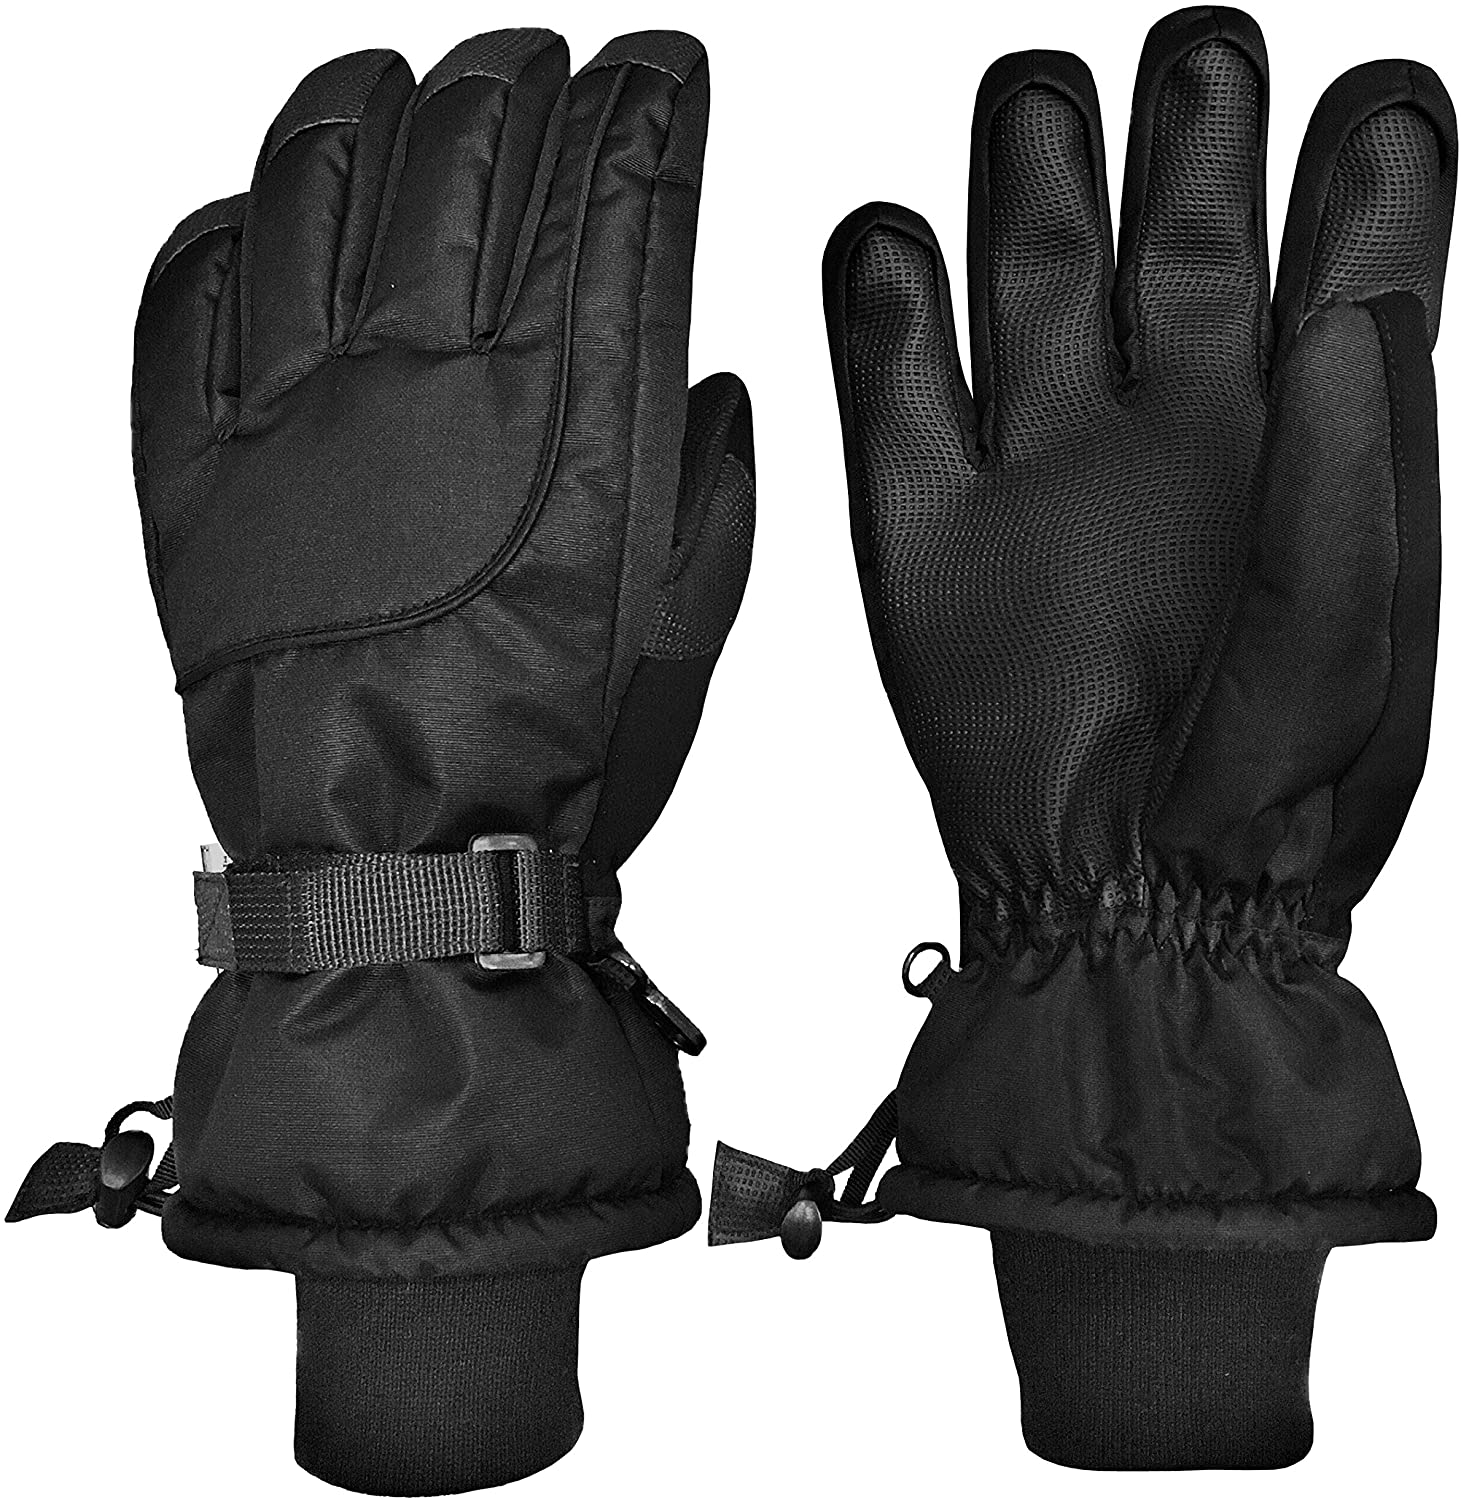 SZ One Size 282 DU-PONT Thermal Lite BNWT Men's Blue Ski Gloves 